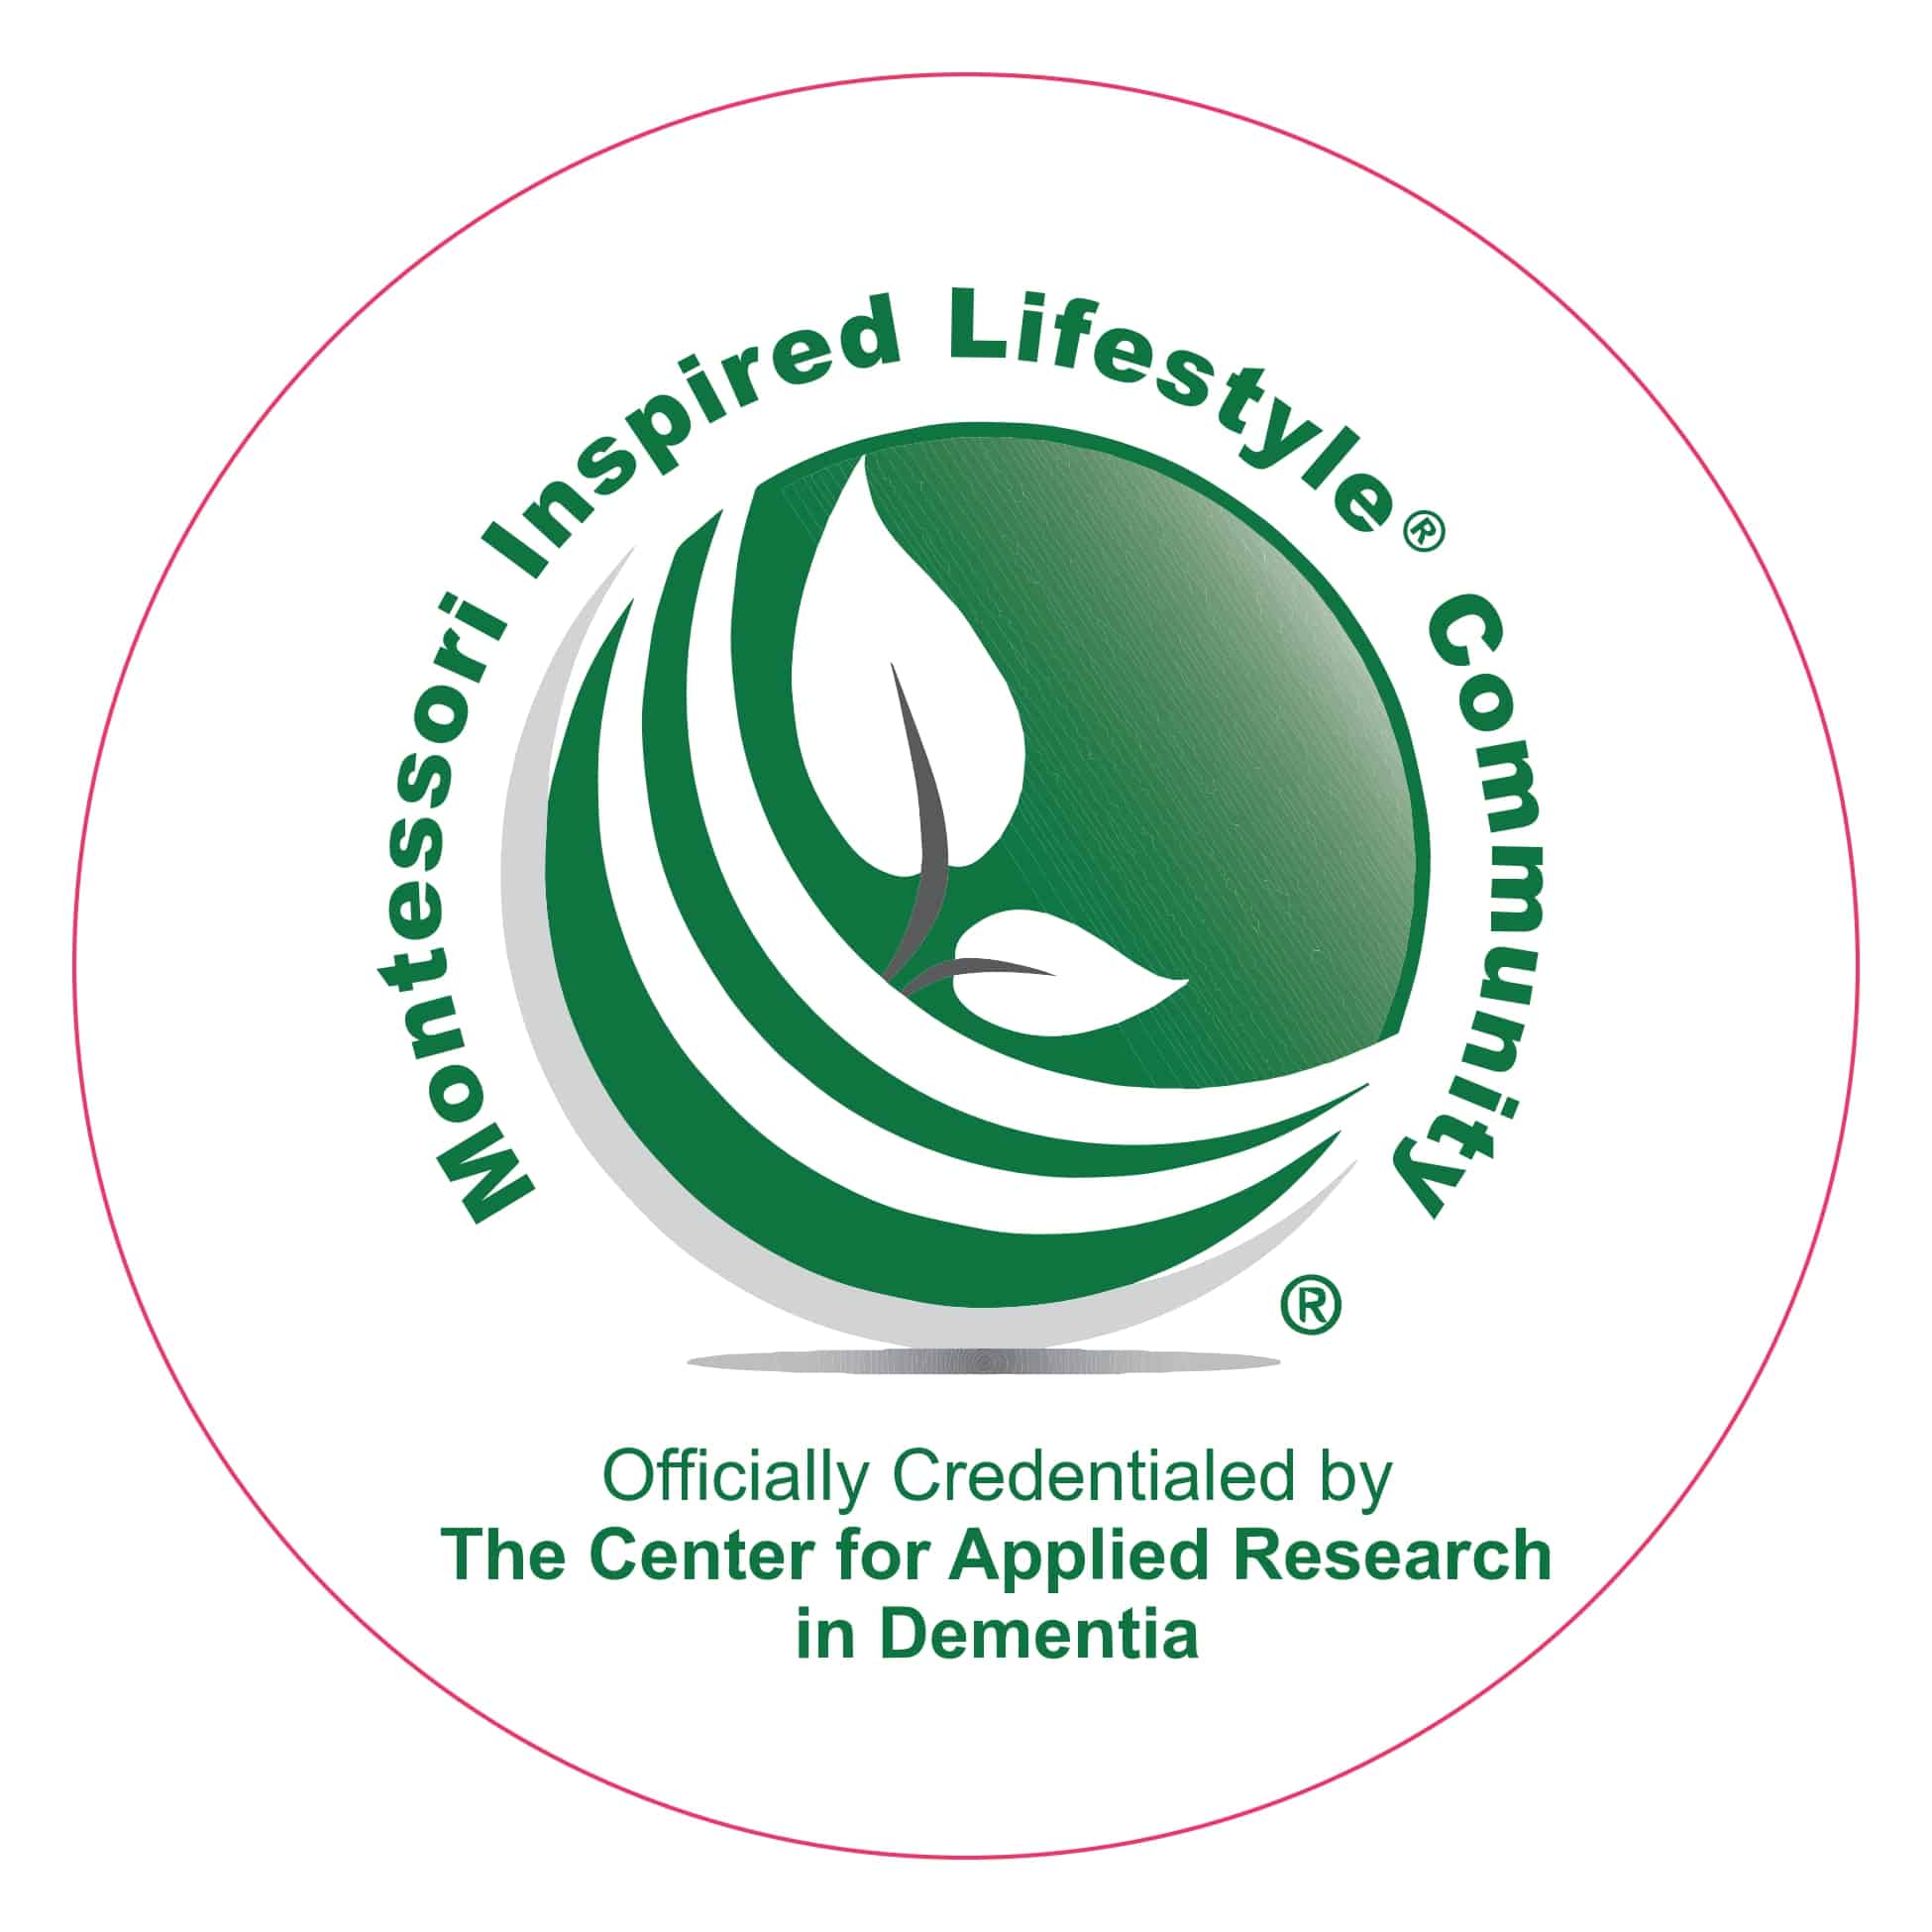 Montessori Inspired Lifestyle Community Award Badge